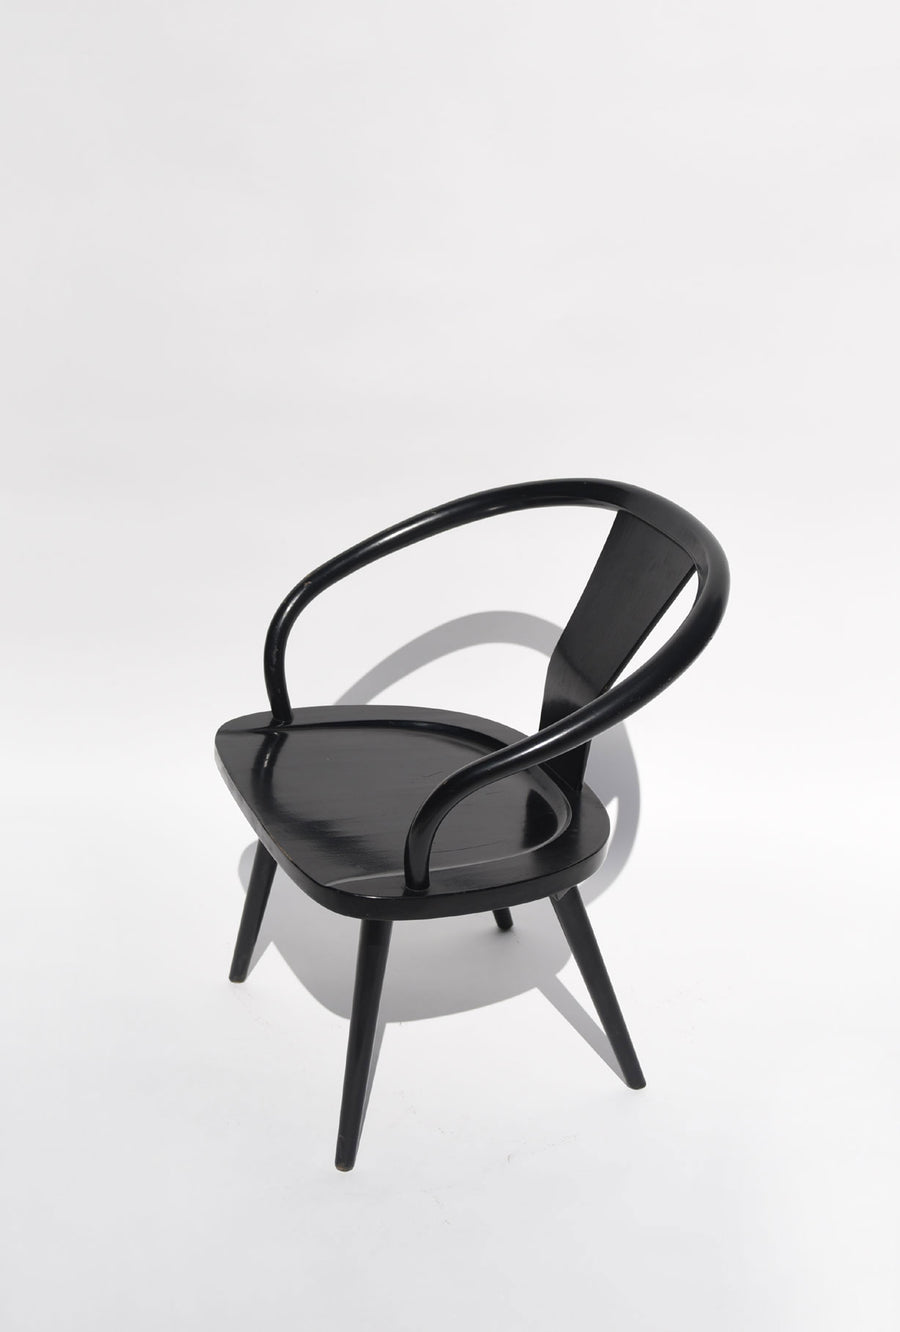 Kamperett Vintage Isamu Kenmochi, Chair, Model 207